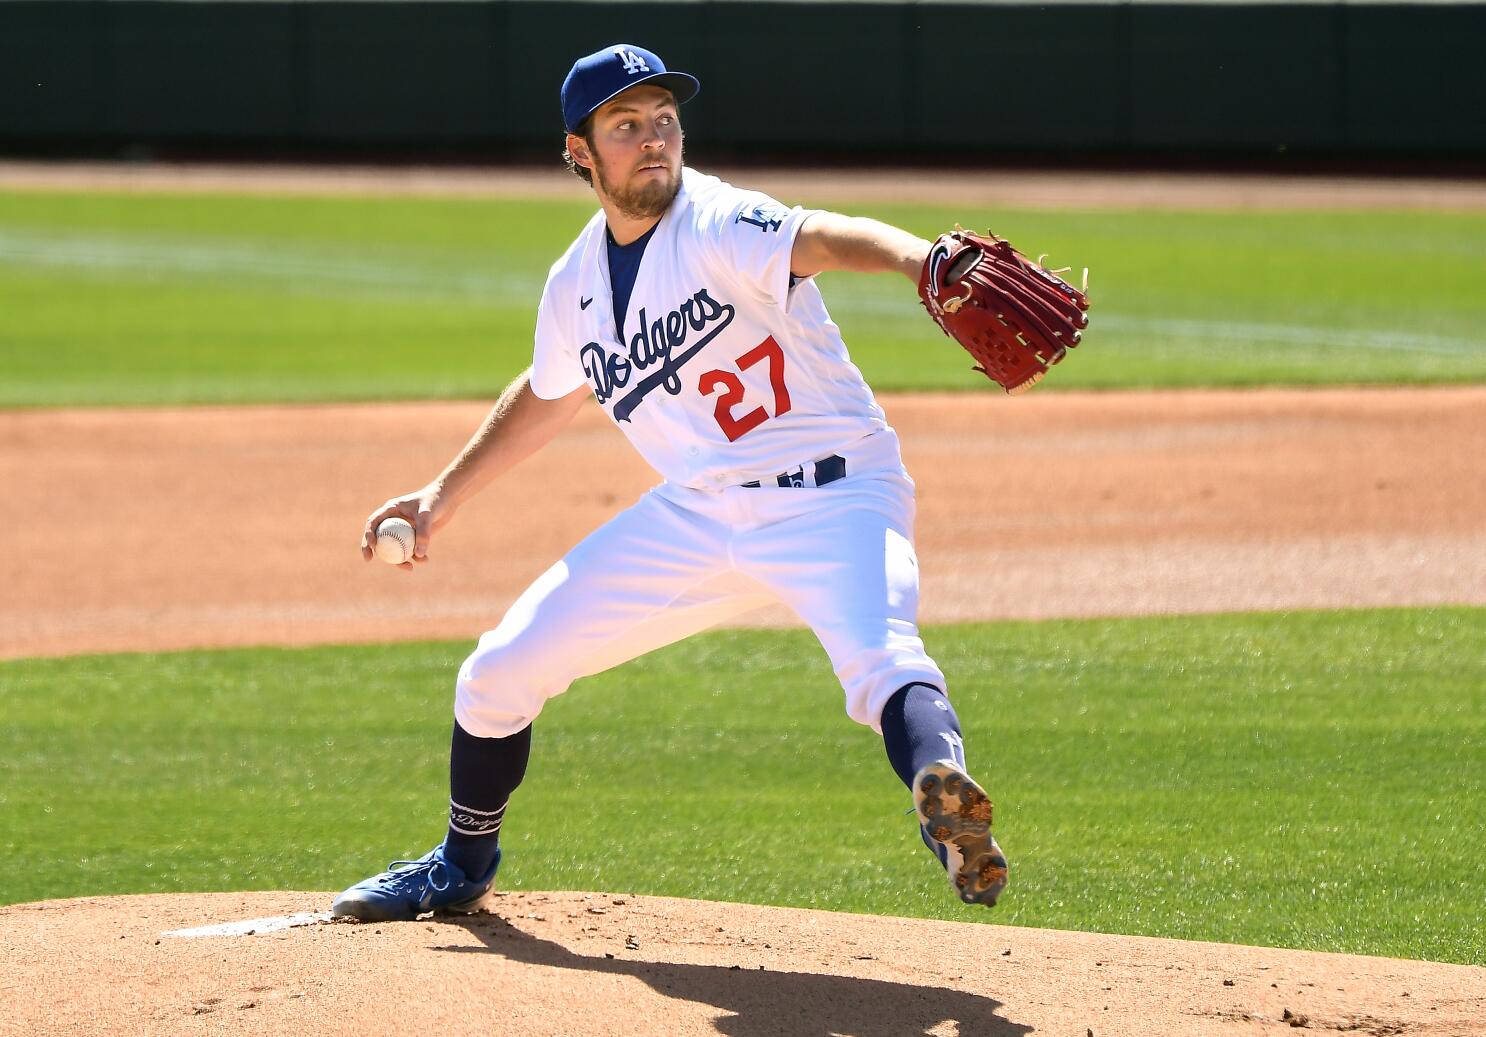 What are Dodgers' next steps after Trevor Bauer's reinstatement